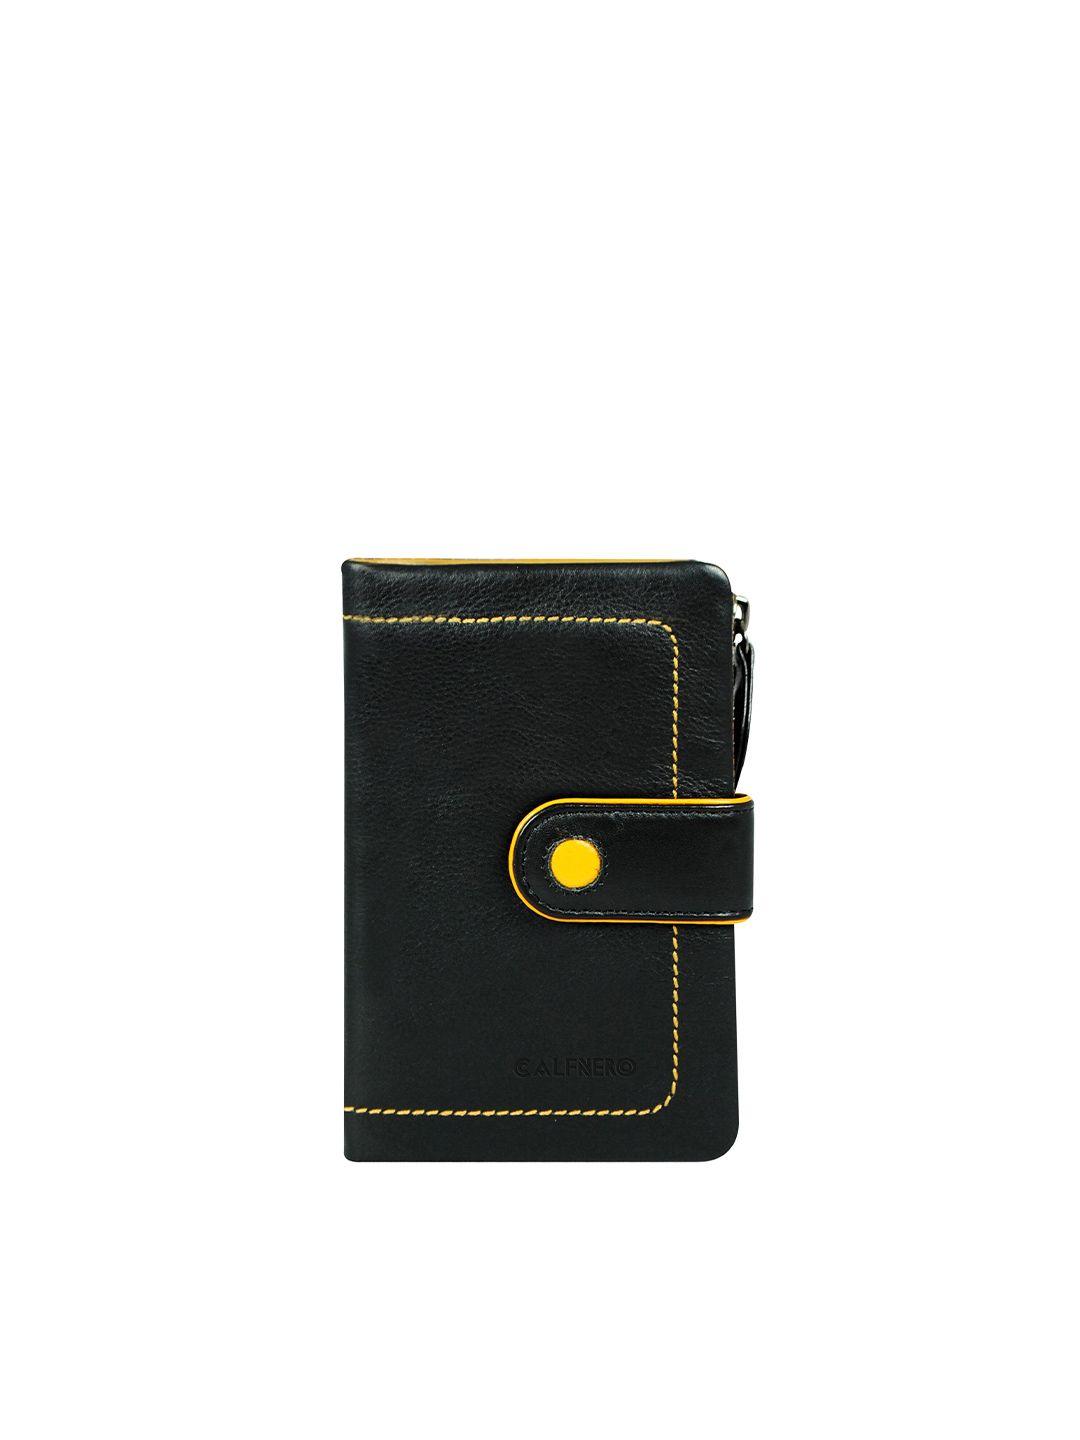 calfnero women black leather two fold wallet